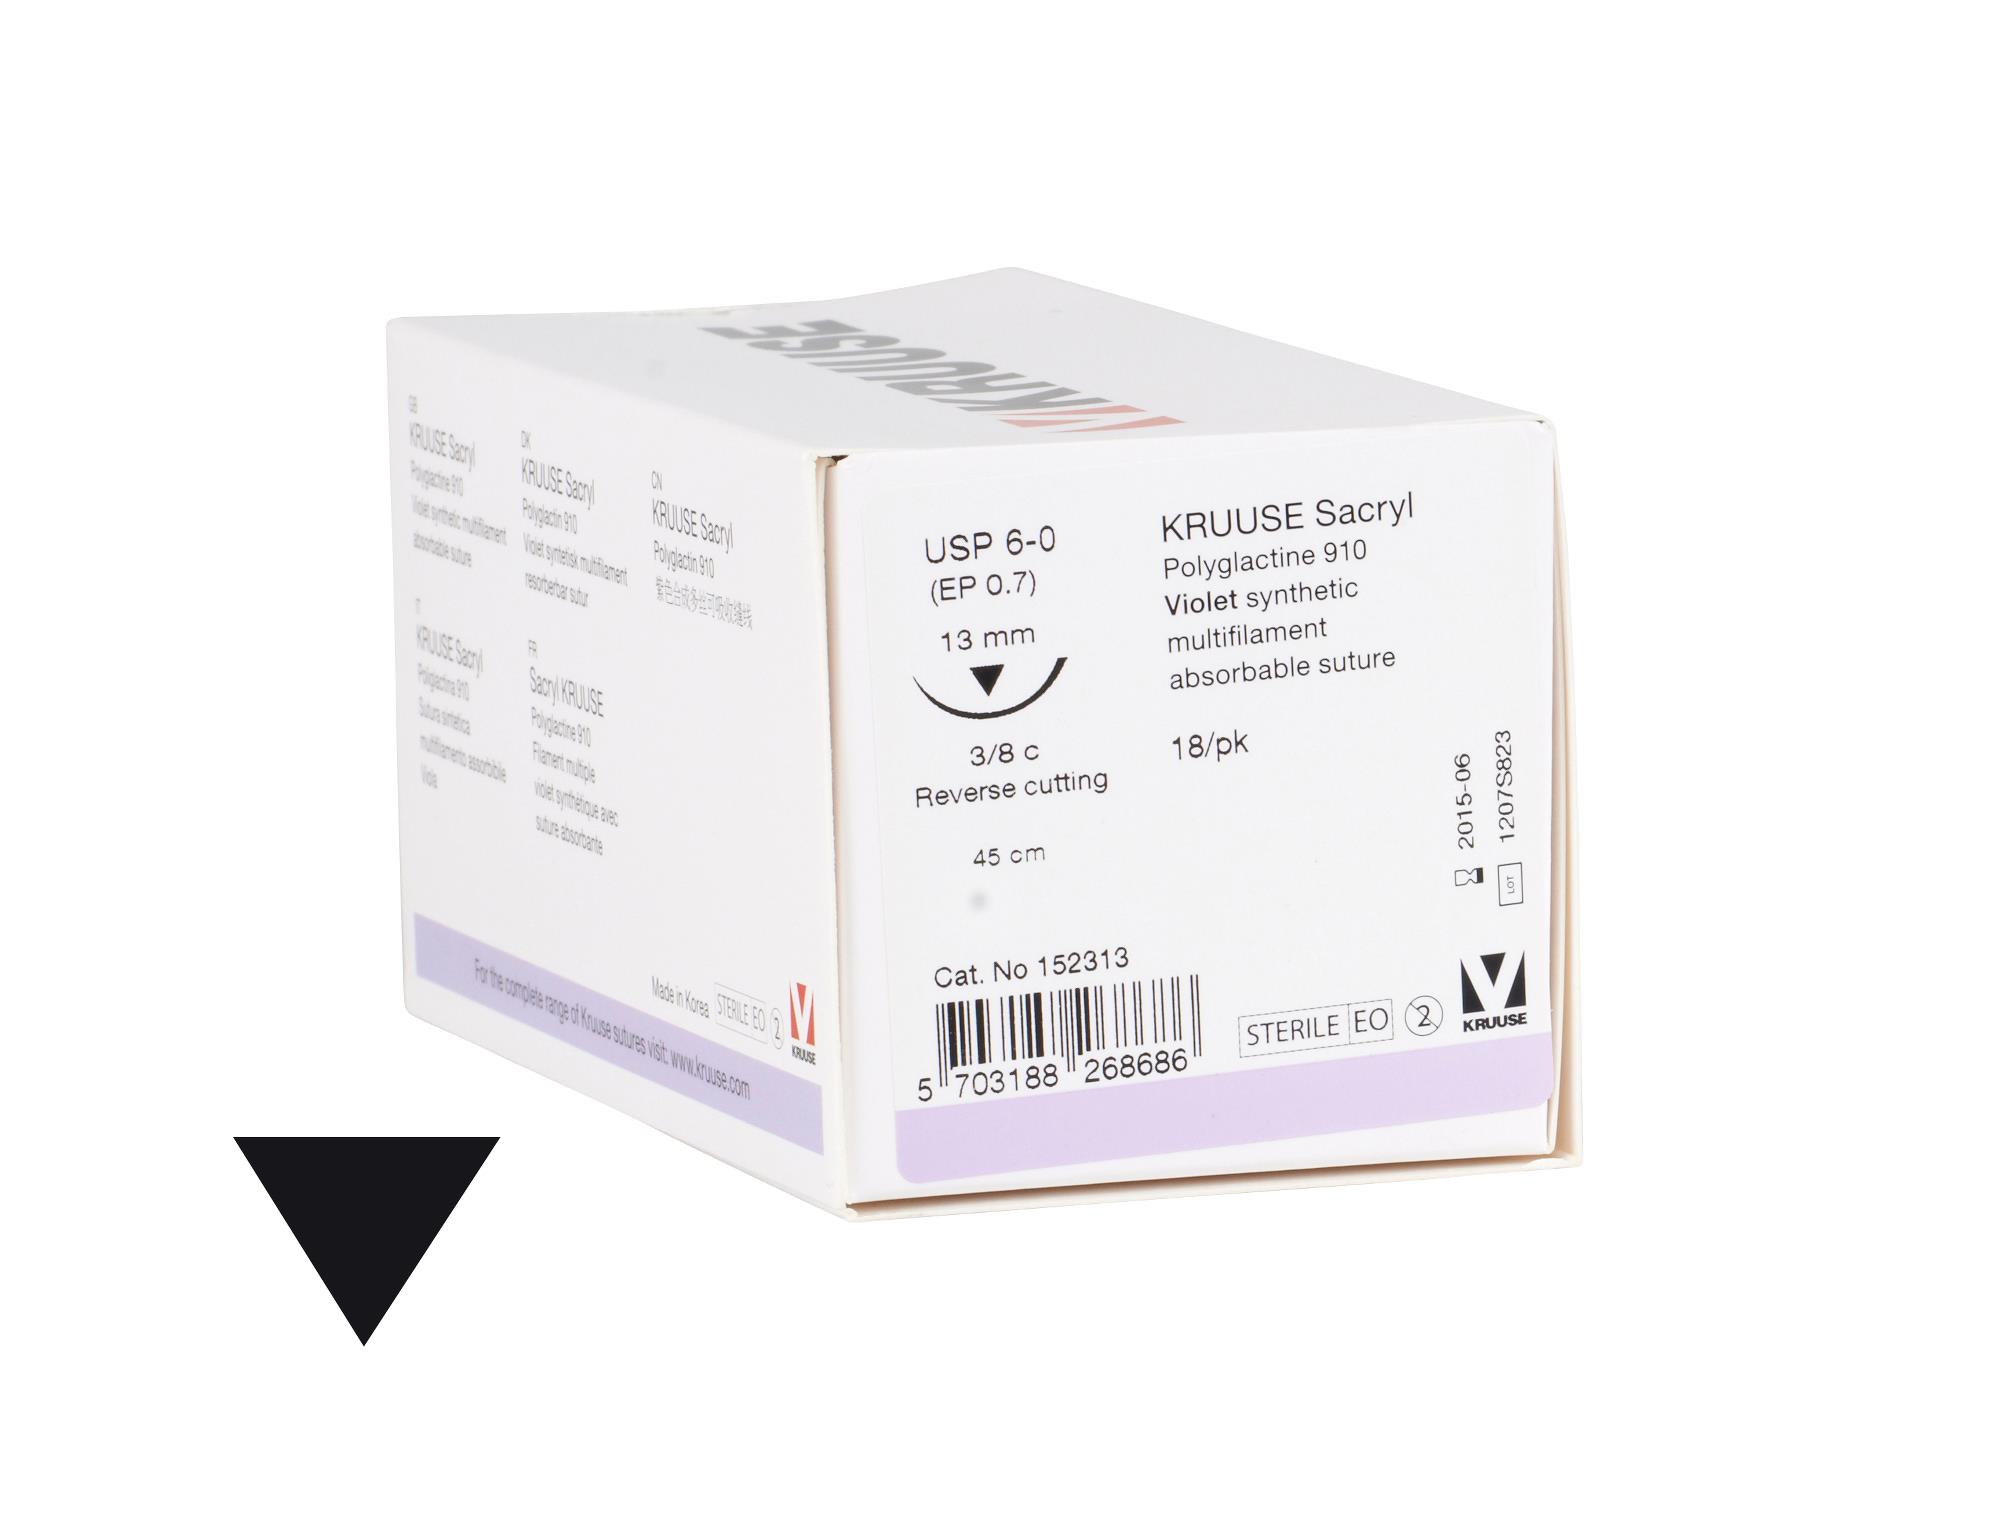 KRUUSE Sacryl suture, USP 6-0, 45 cm, needle: 13 mm, reverse cutting, 3/8 circle. 18/pk